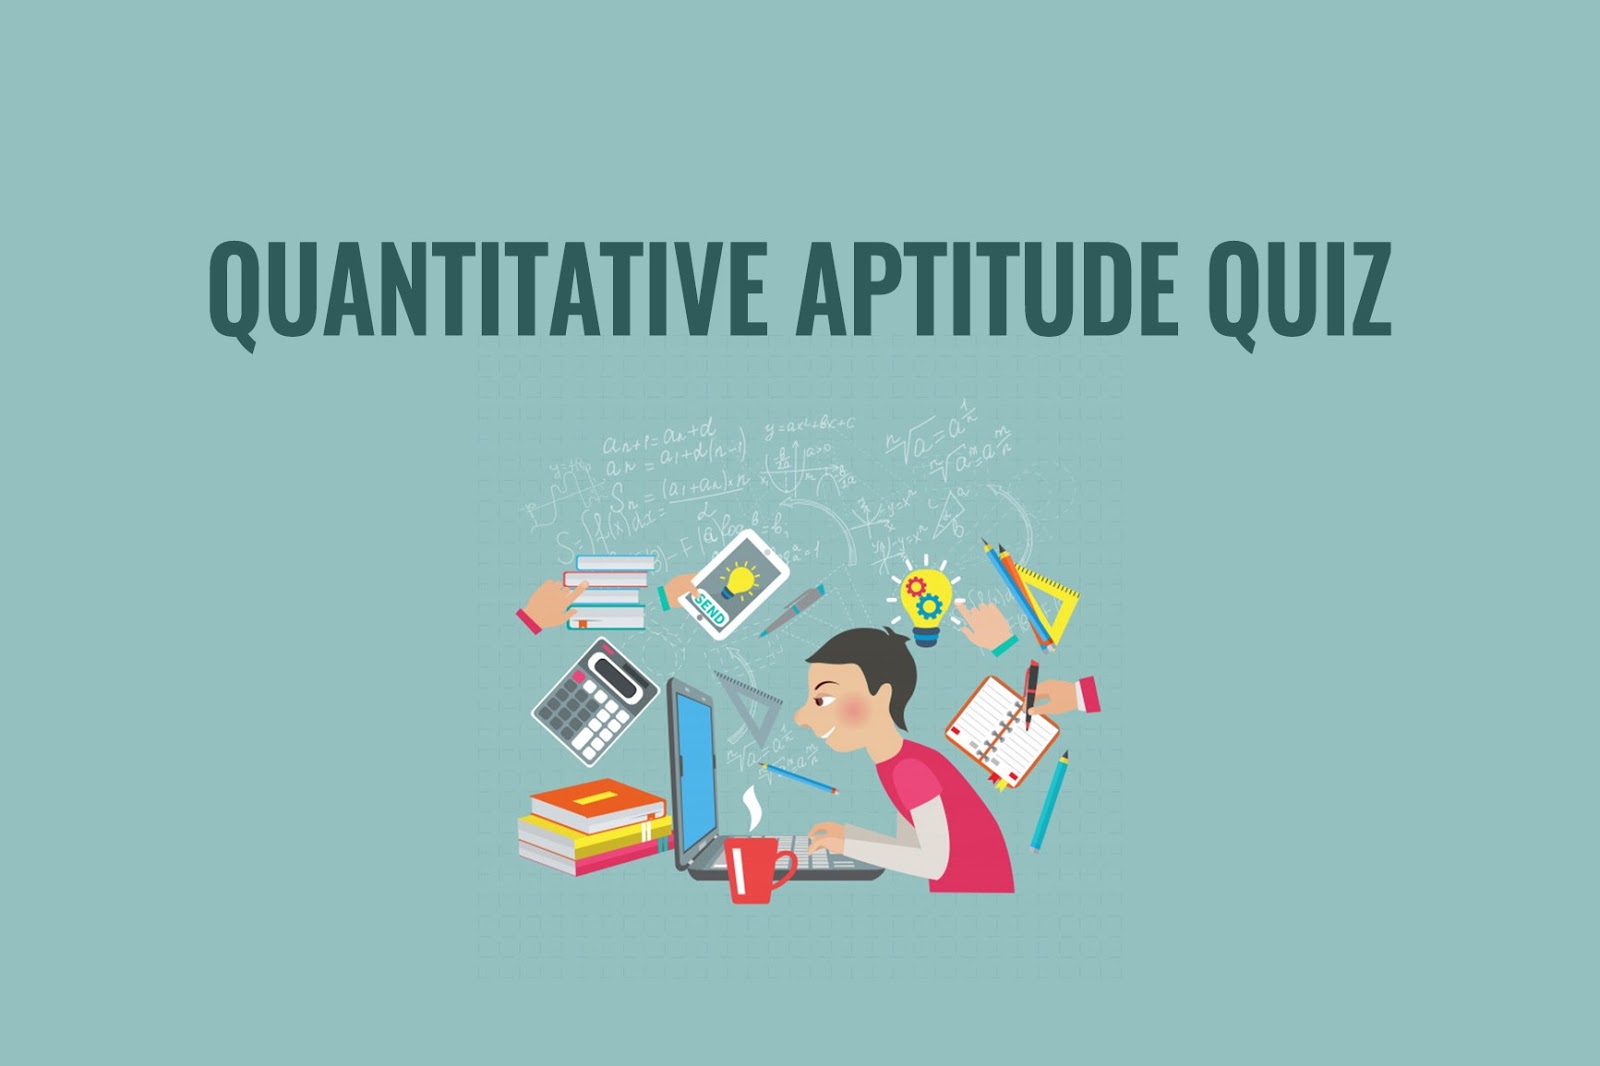 quantitative-aptitude-session-04-youtube